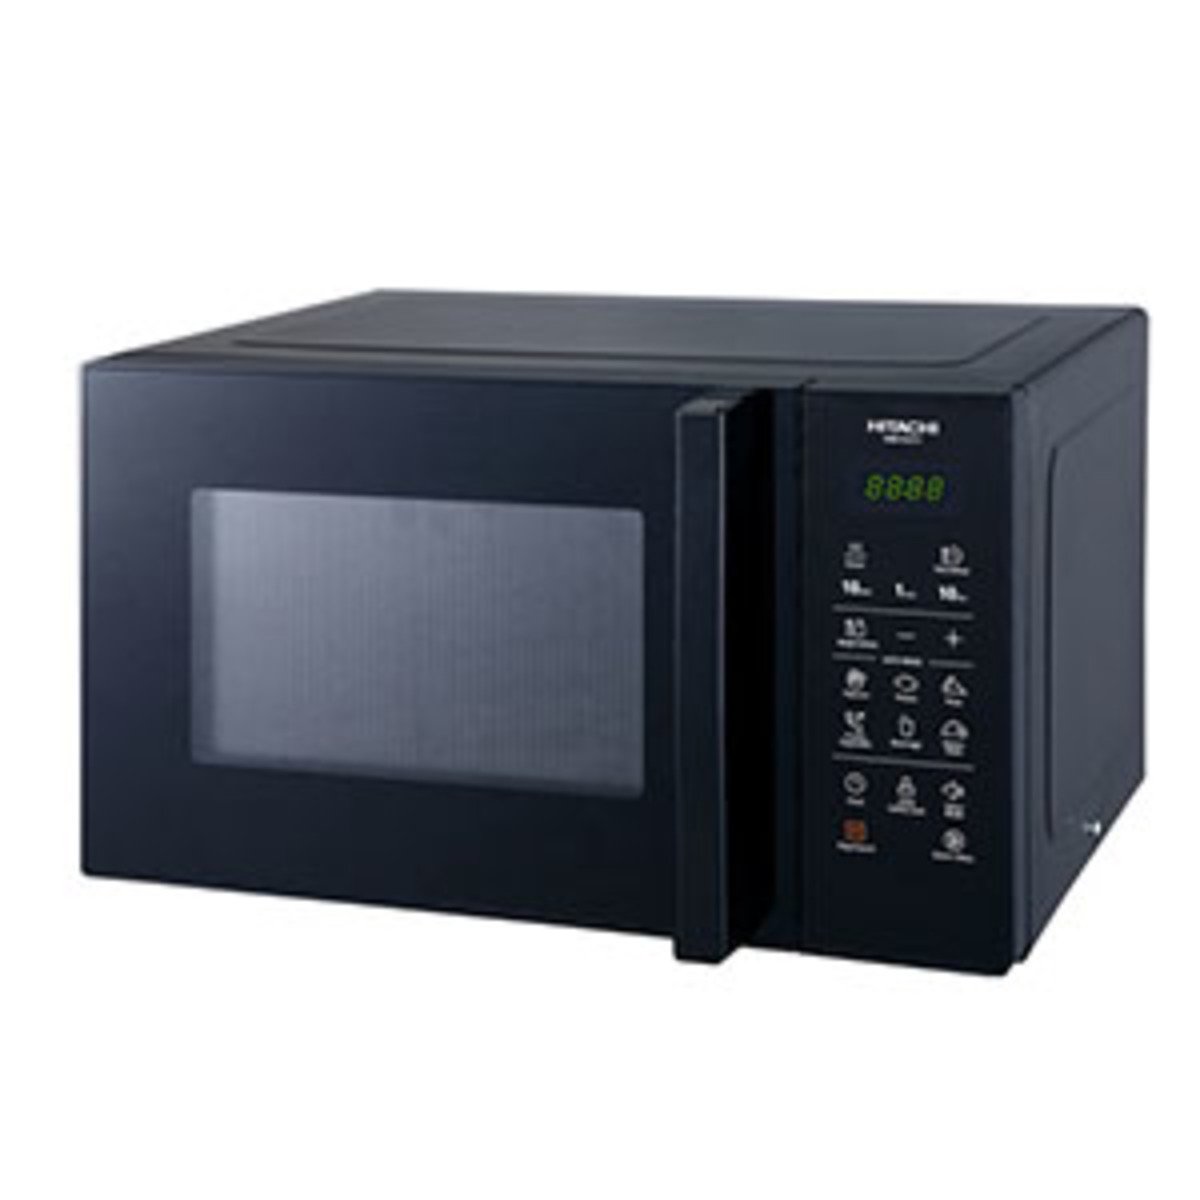 Hitachi Microwave Oven HMRD2311 23Ltr